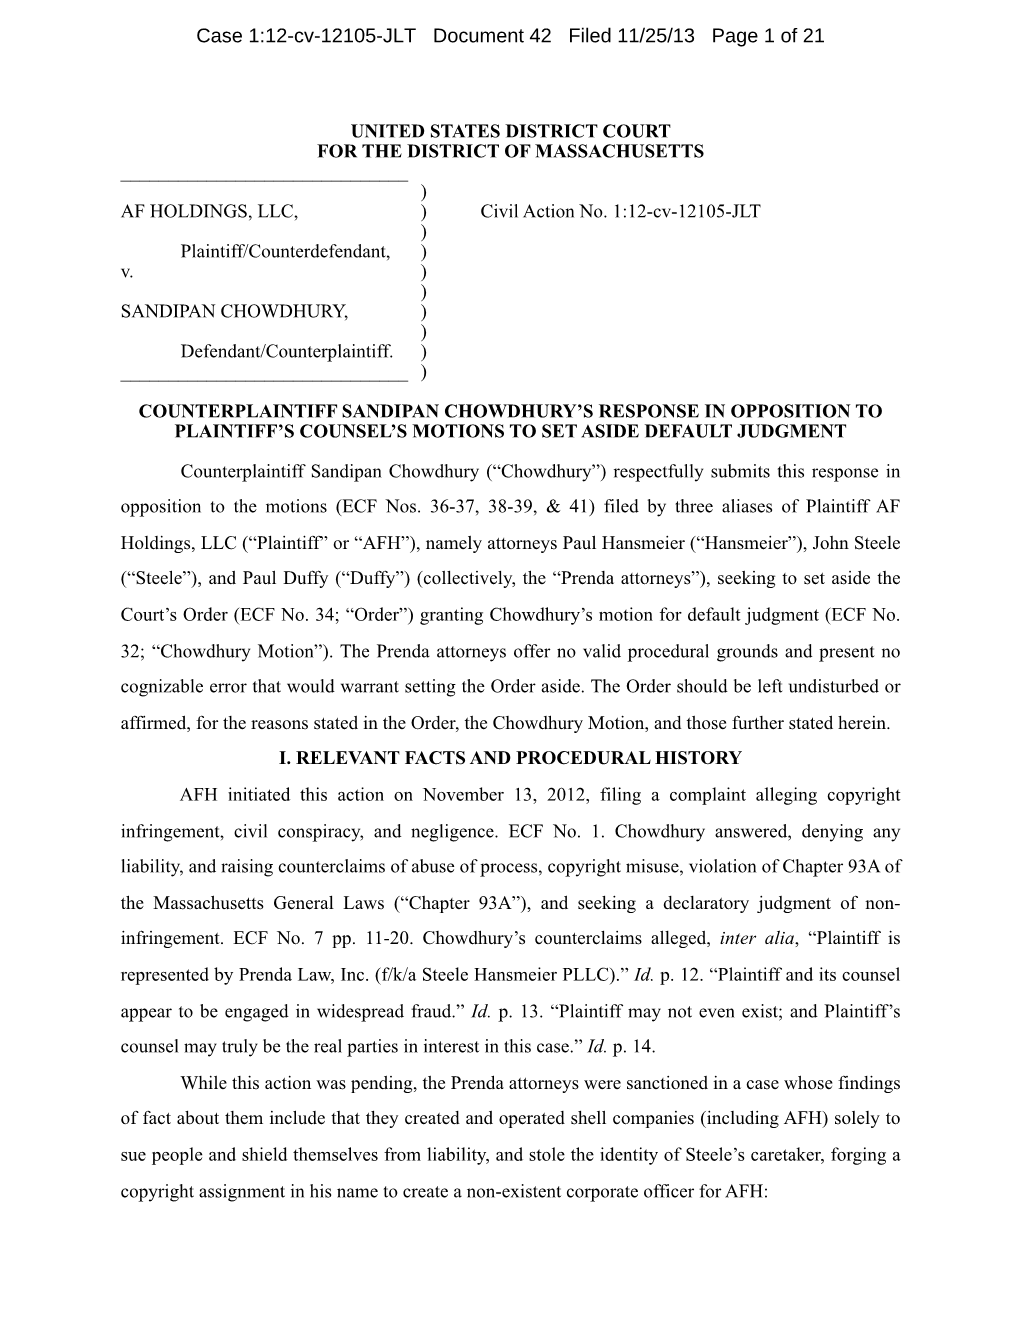 Case 1:12-Cv-12105-JLT Document 42 Filed 11/25/13 Page 1 of 21